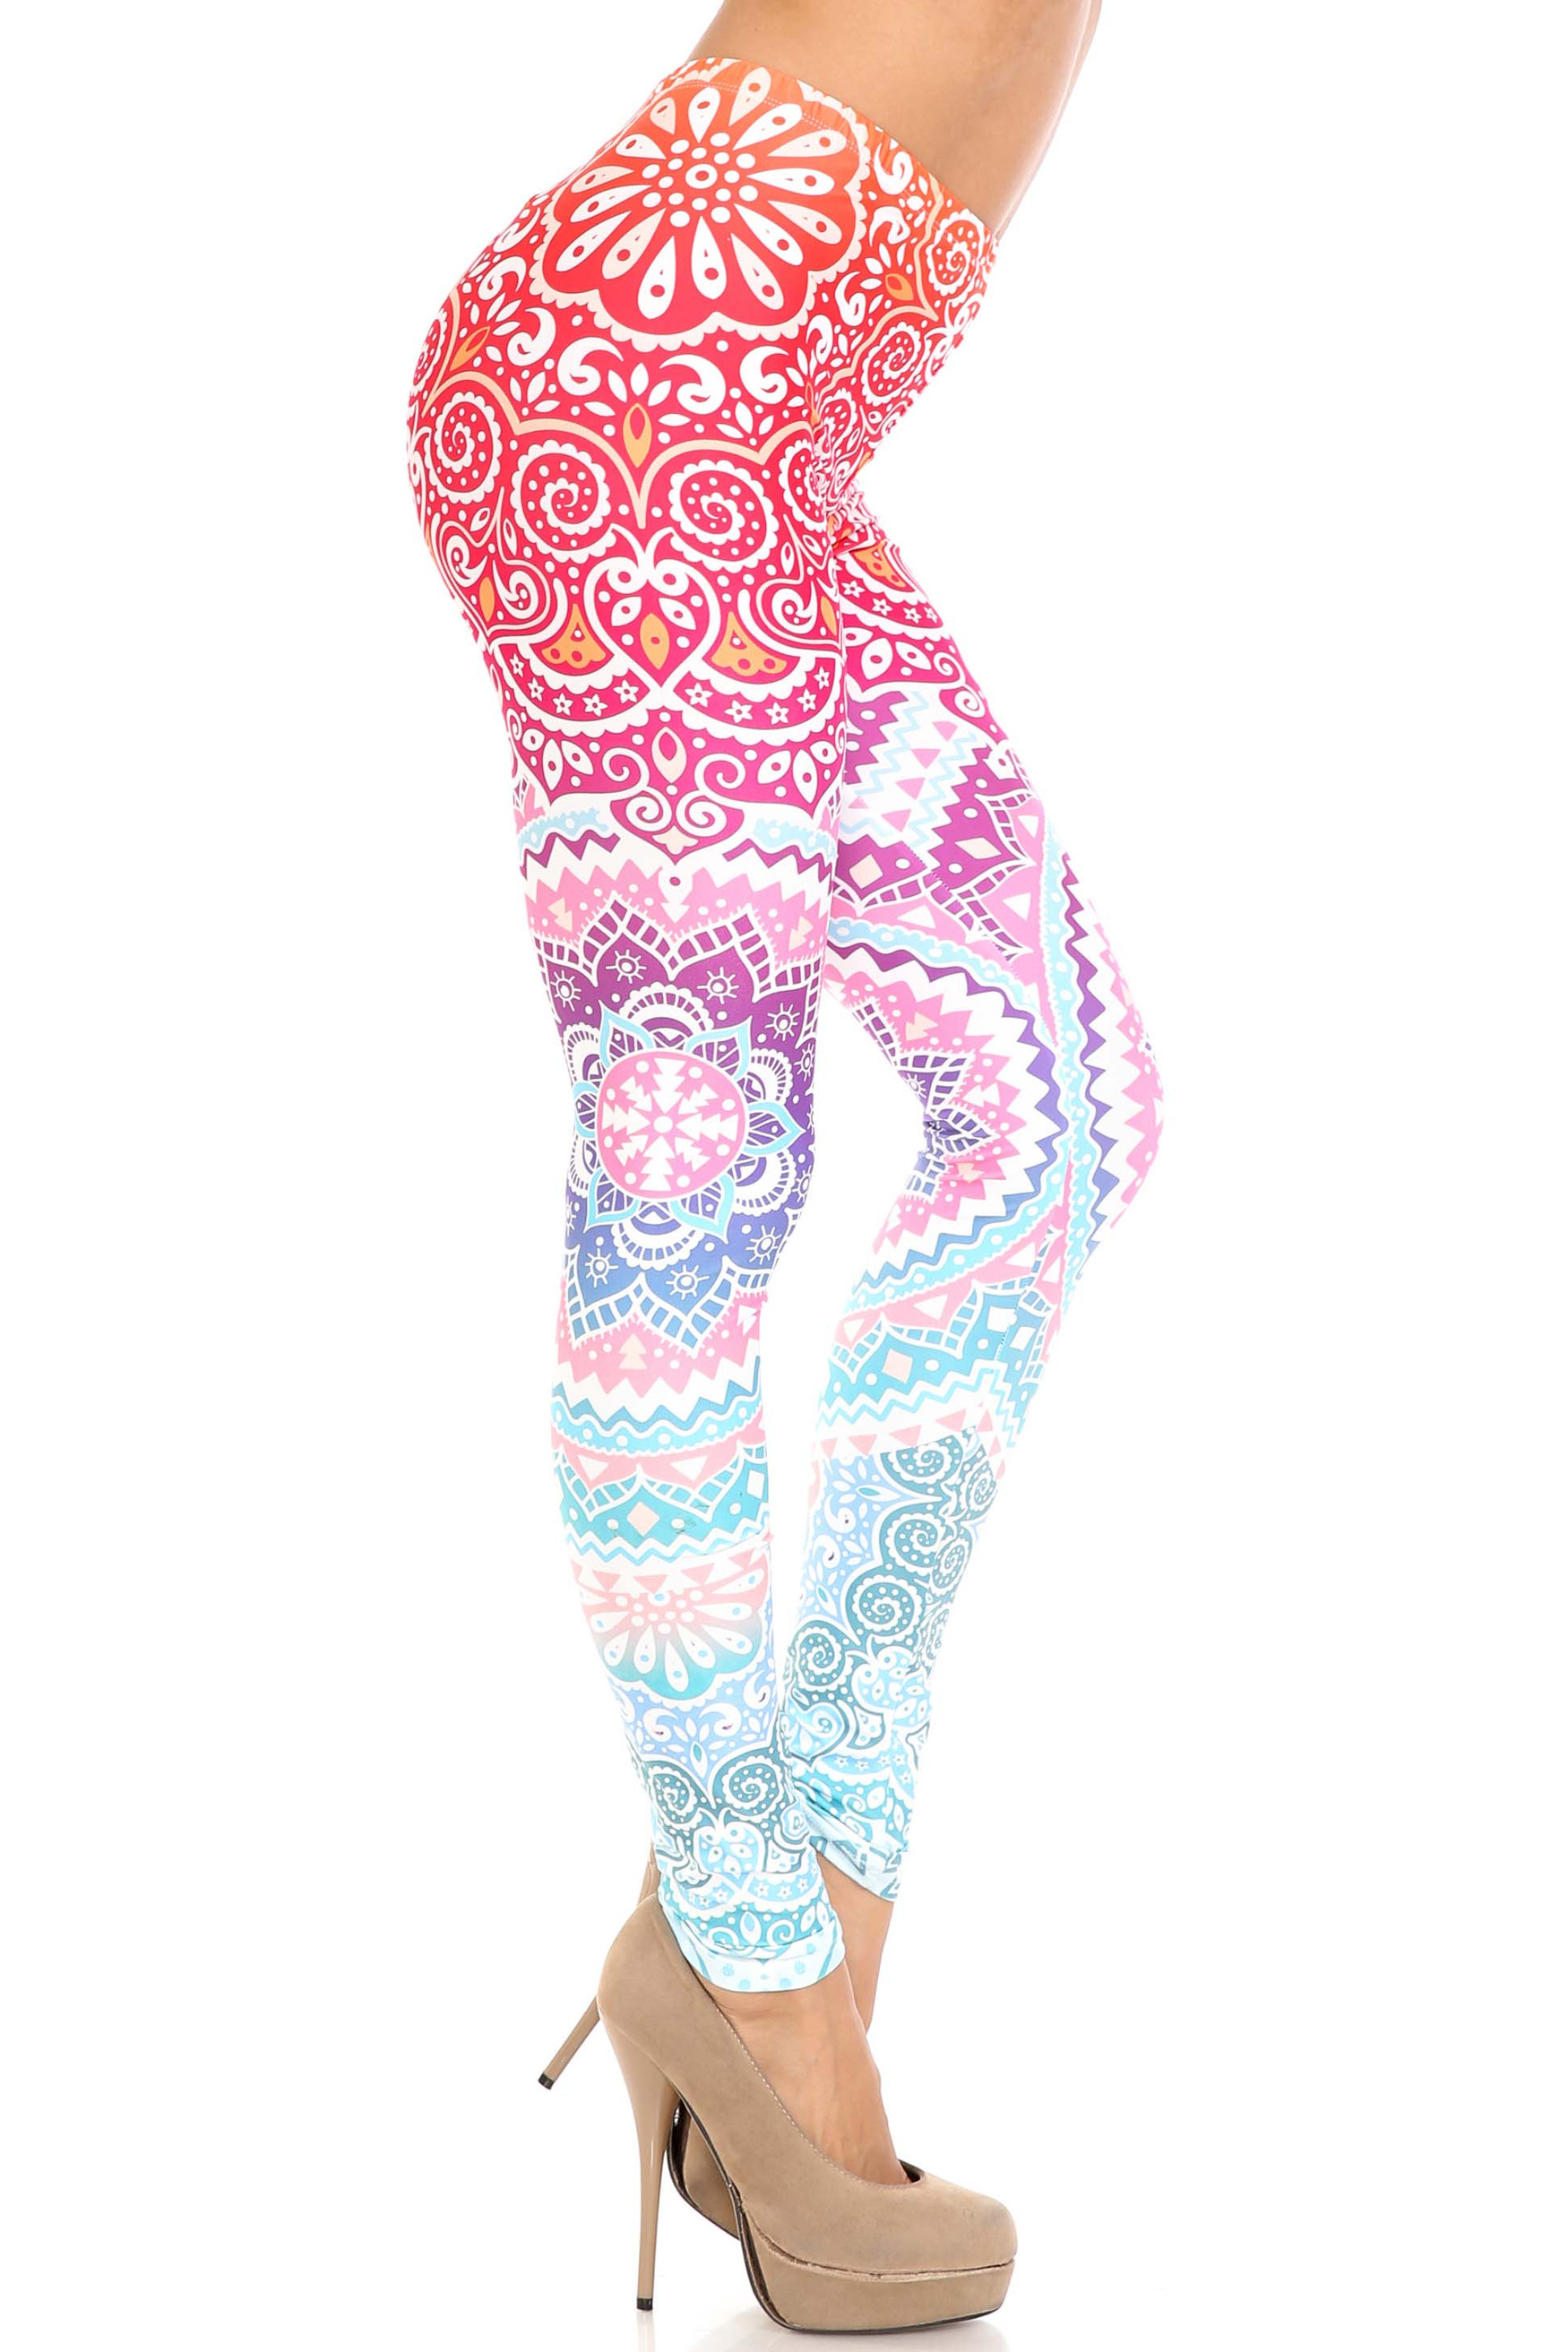 Creamy Soft Ombre Mandala Aztec Extra Plus Size Leggings - 3X-5X - USA Fashion™